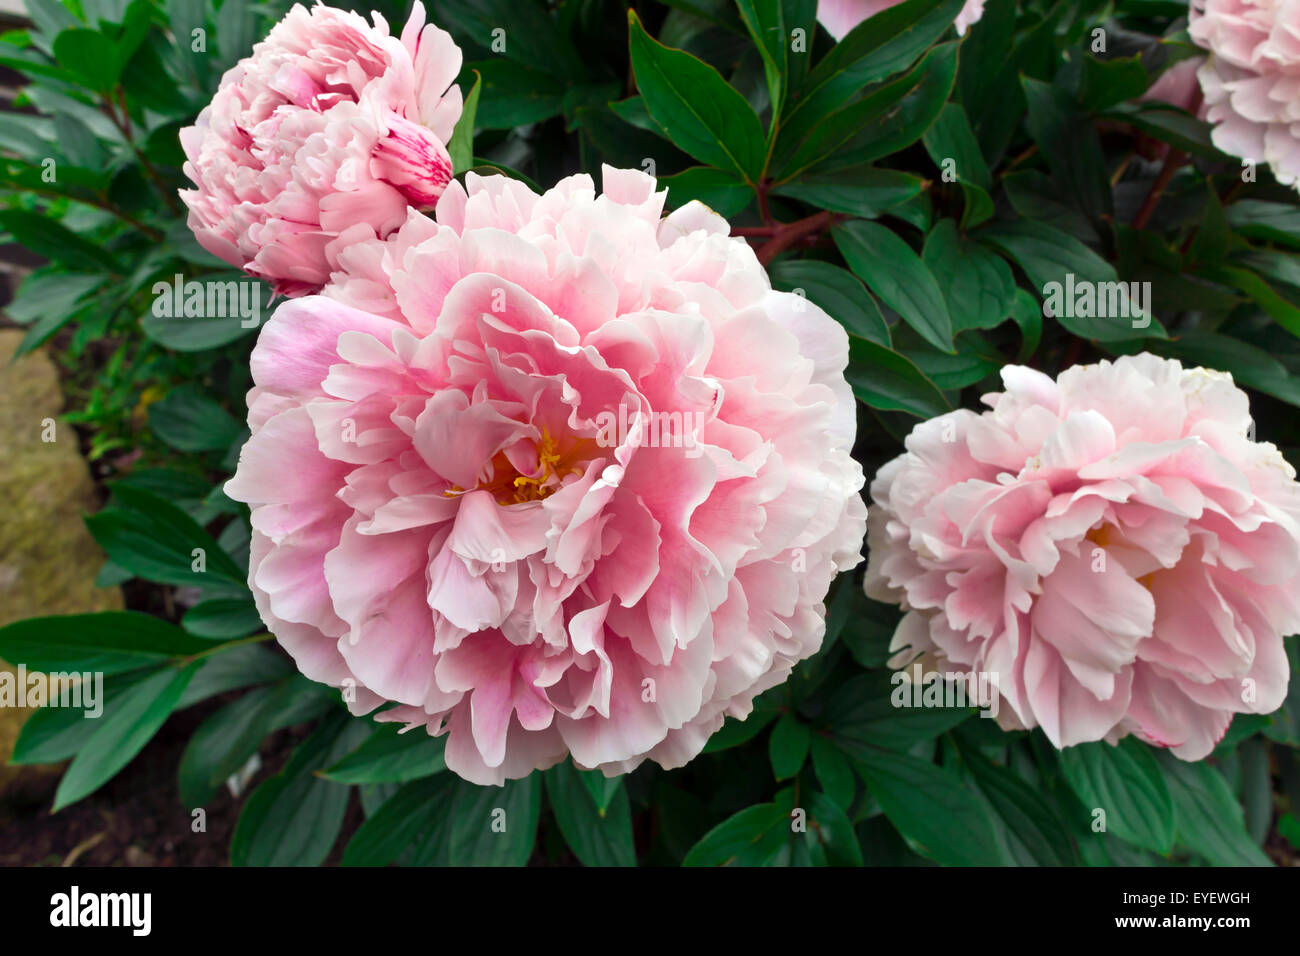 Große rosa Pfingstrose blühende Pflanze in einem Garten. Stockfoto